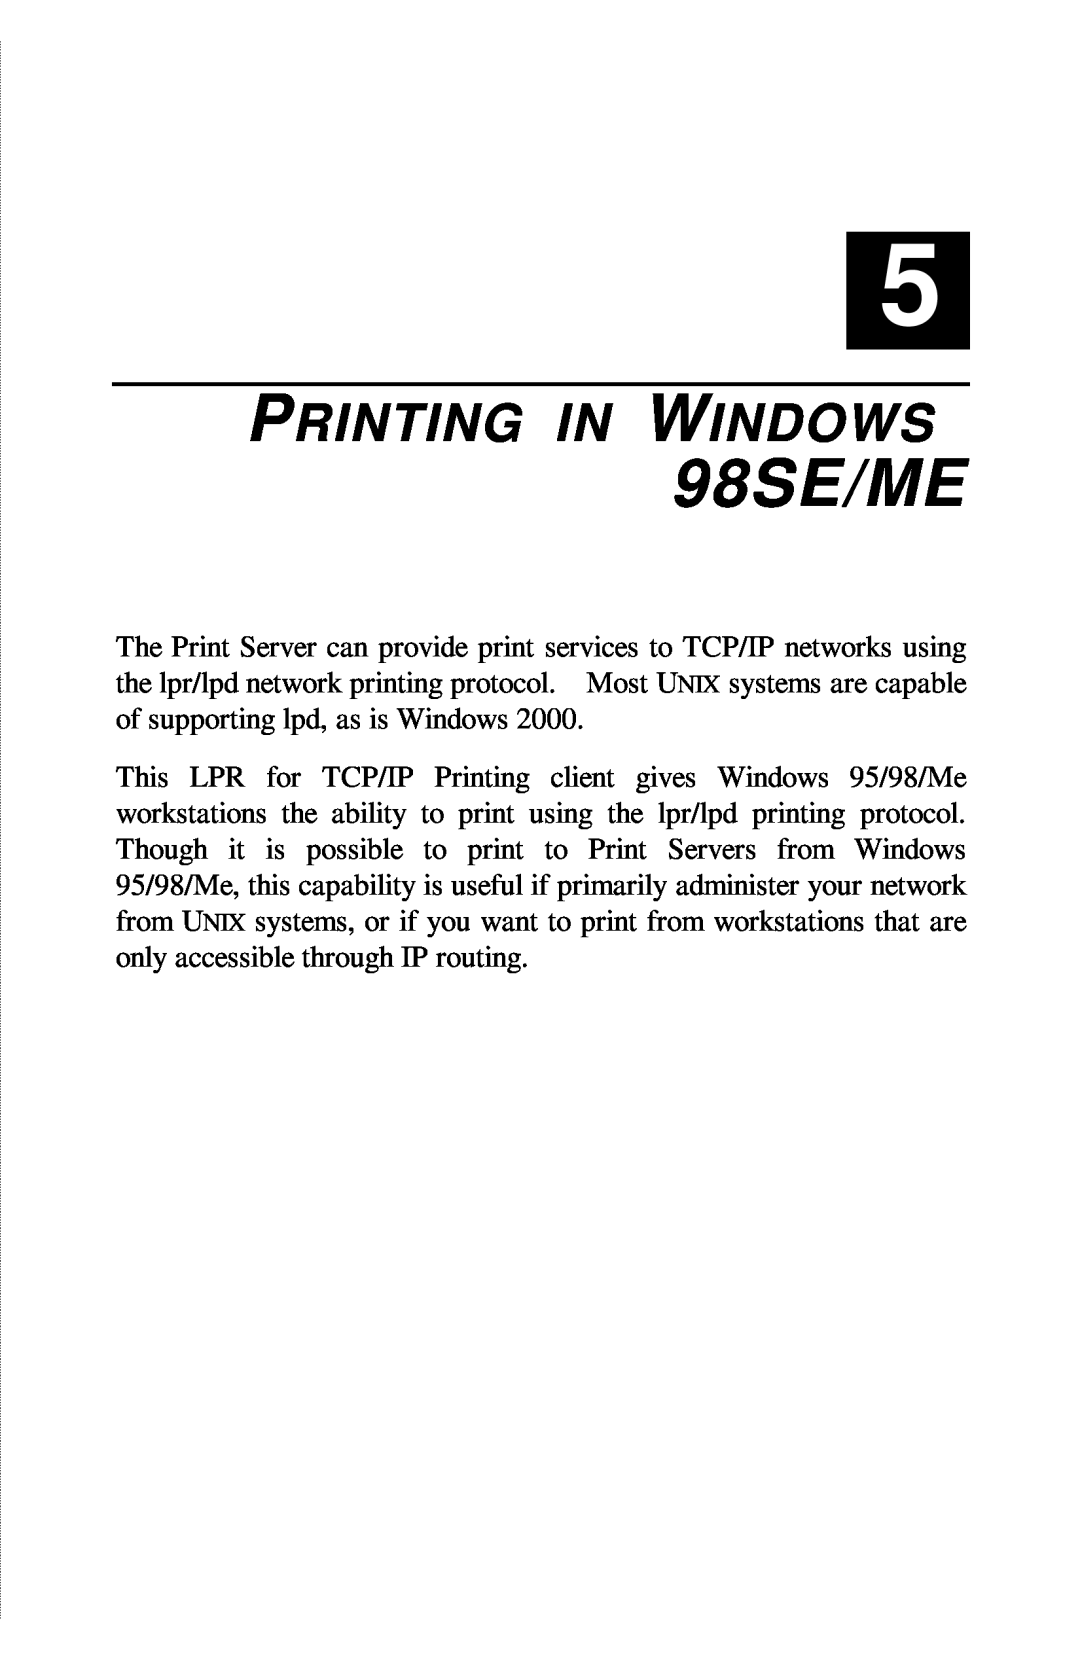 TRENDnet TE100-PIP manual 98SE/ME, Printing In Windows 